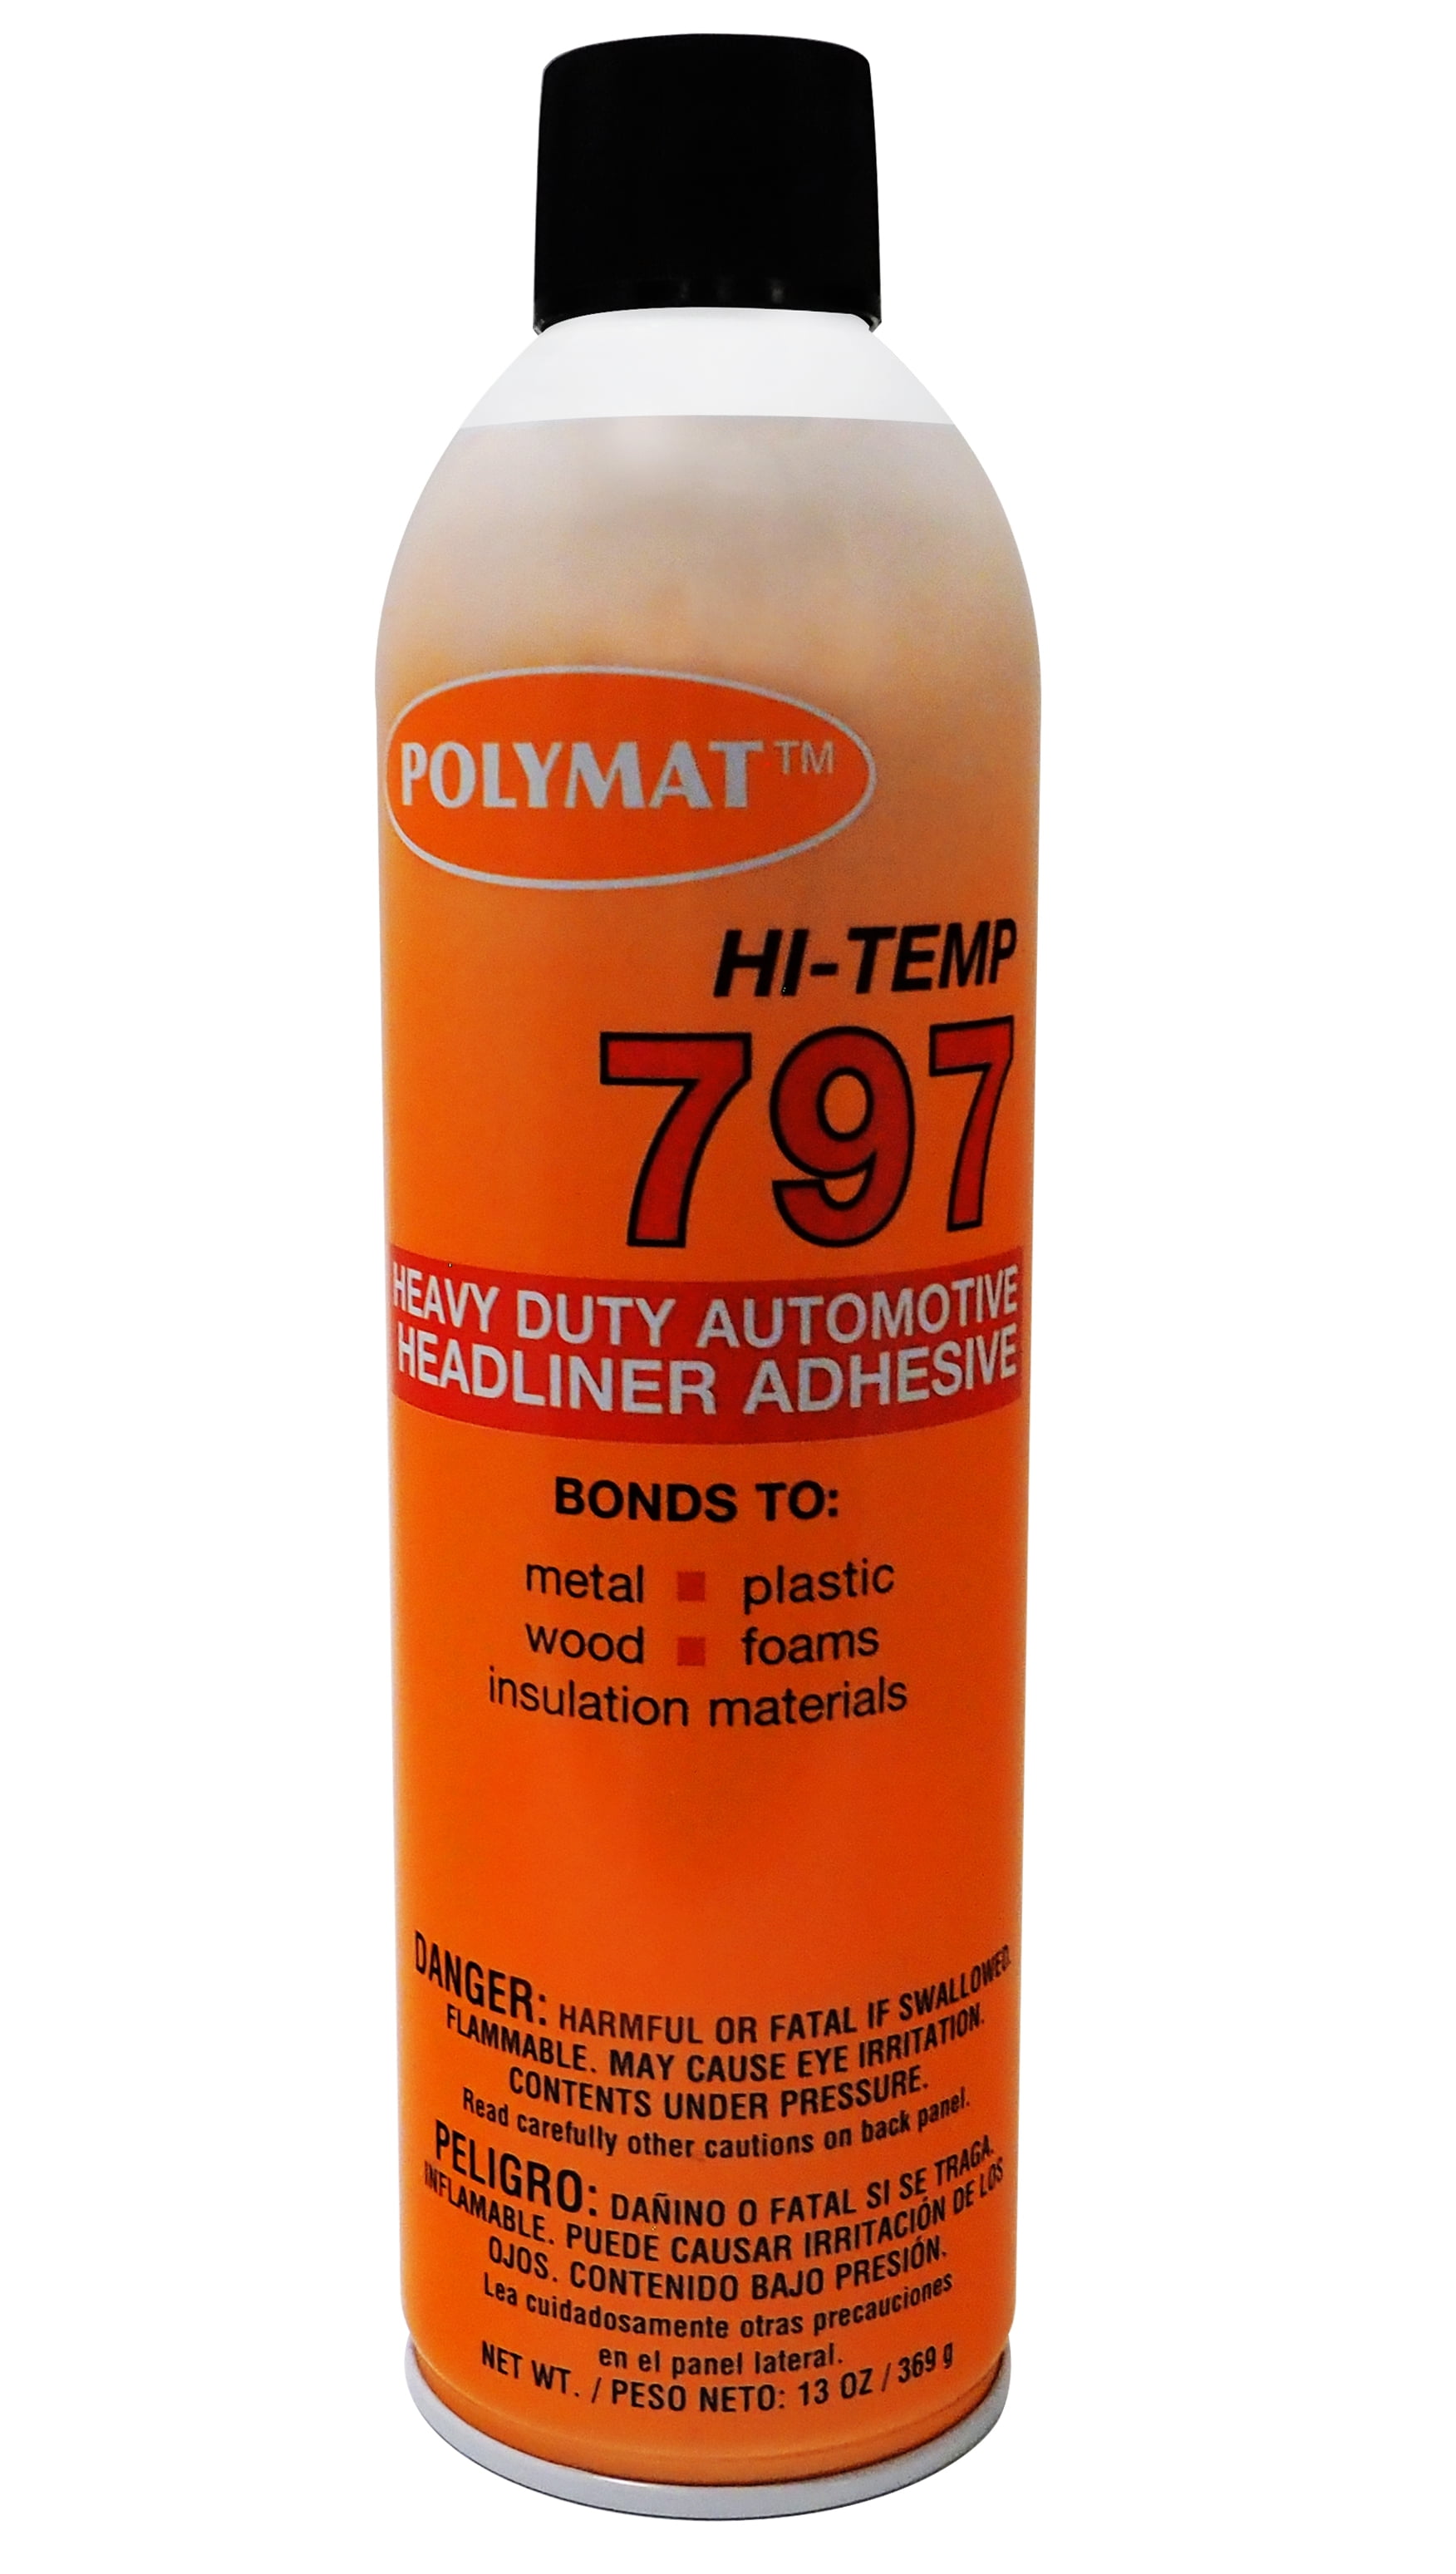 Polymat 797 Hi-Temp Industrial Spray Glue Adhesive BONDS FLEXIBLE